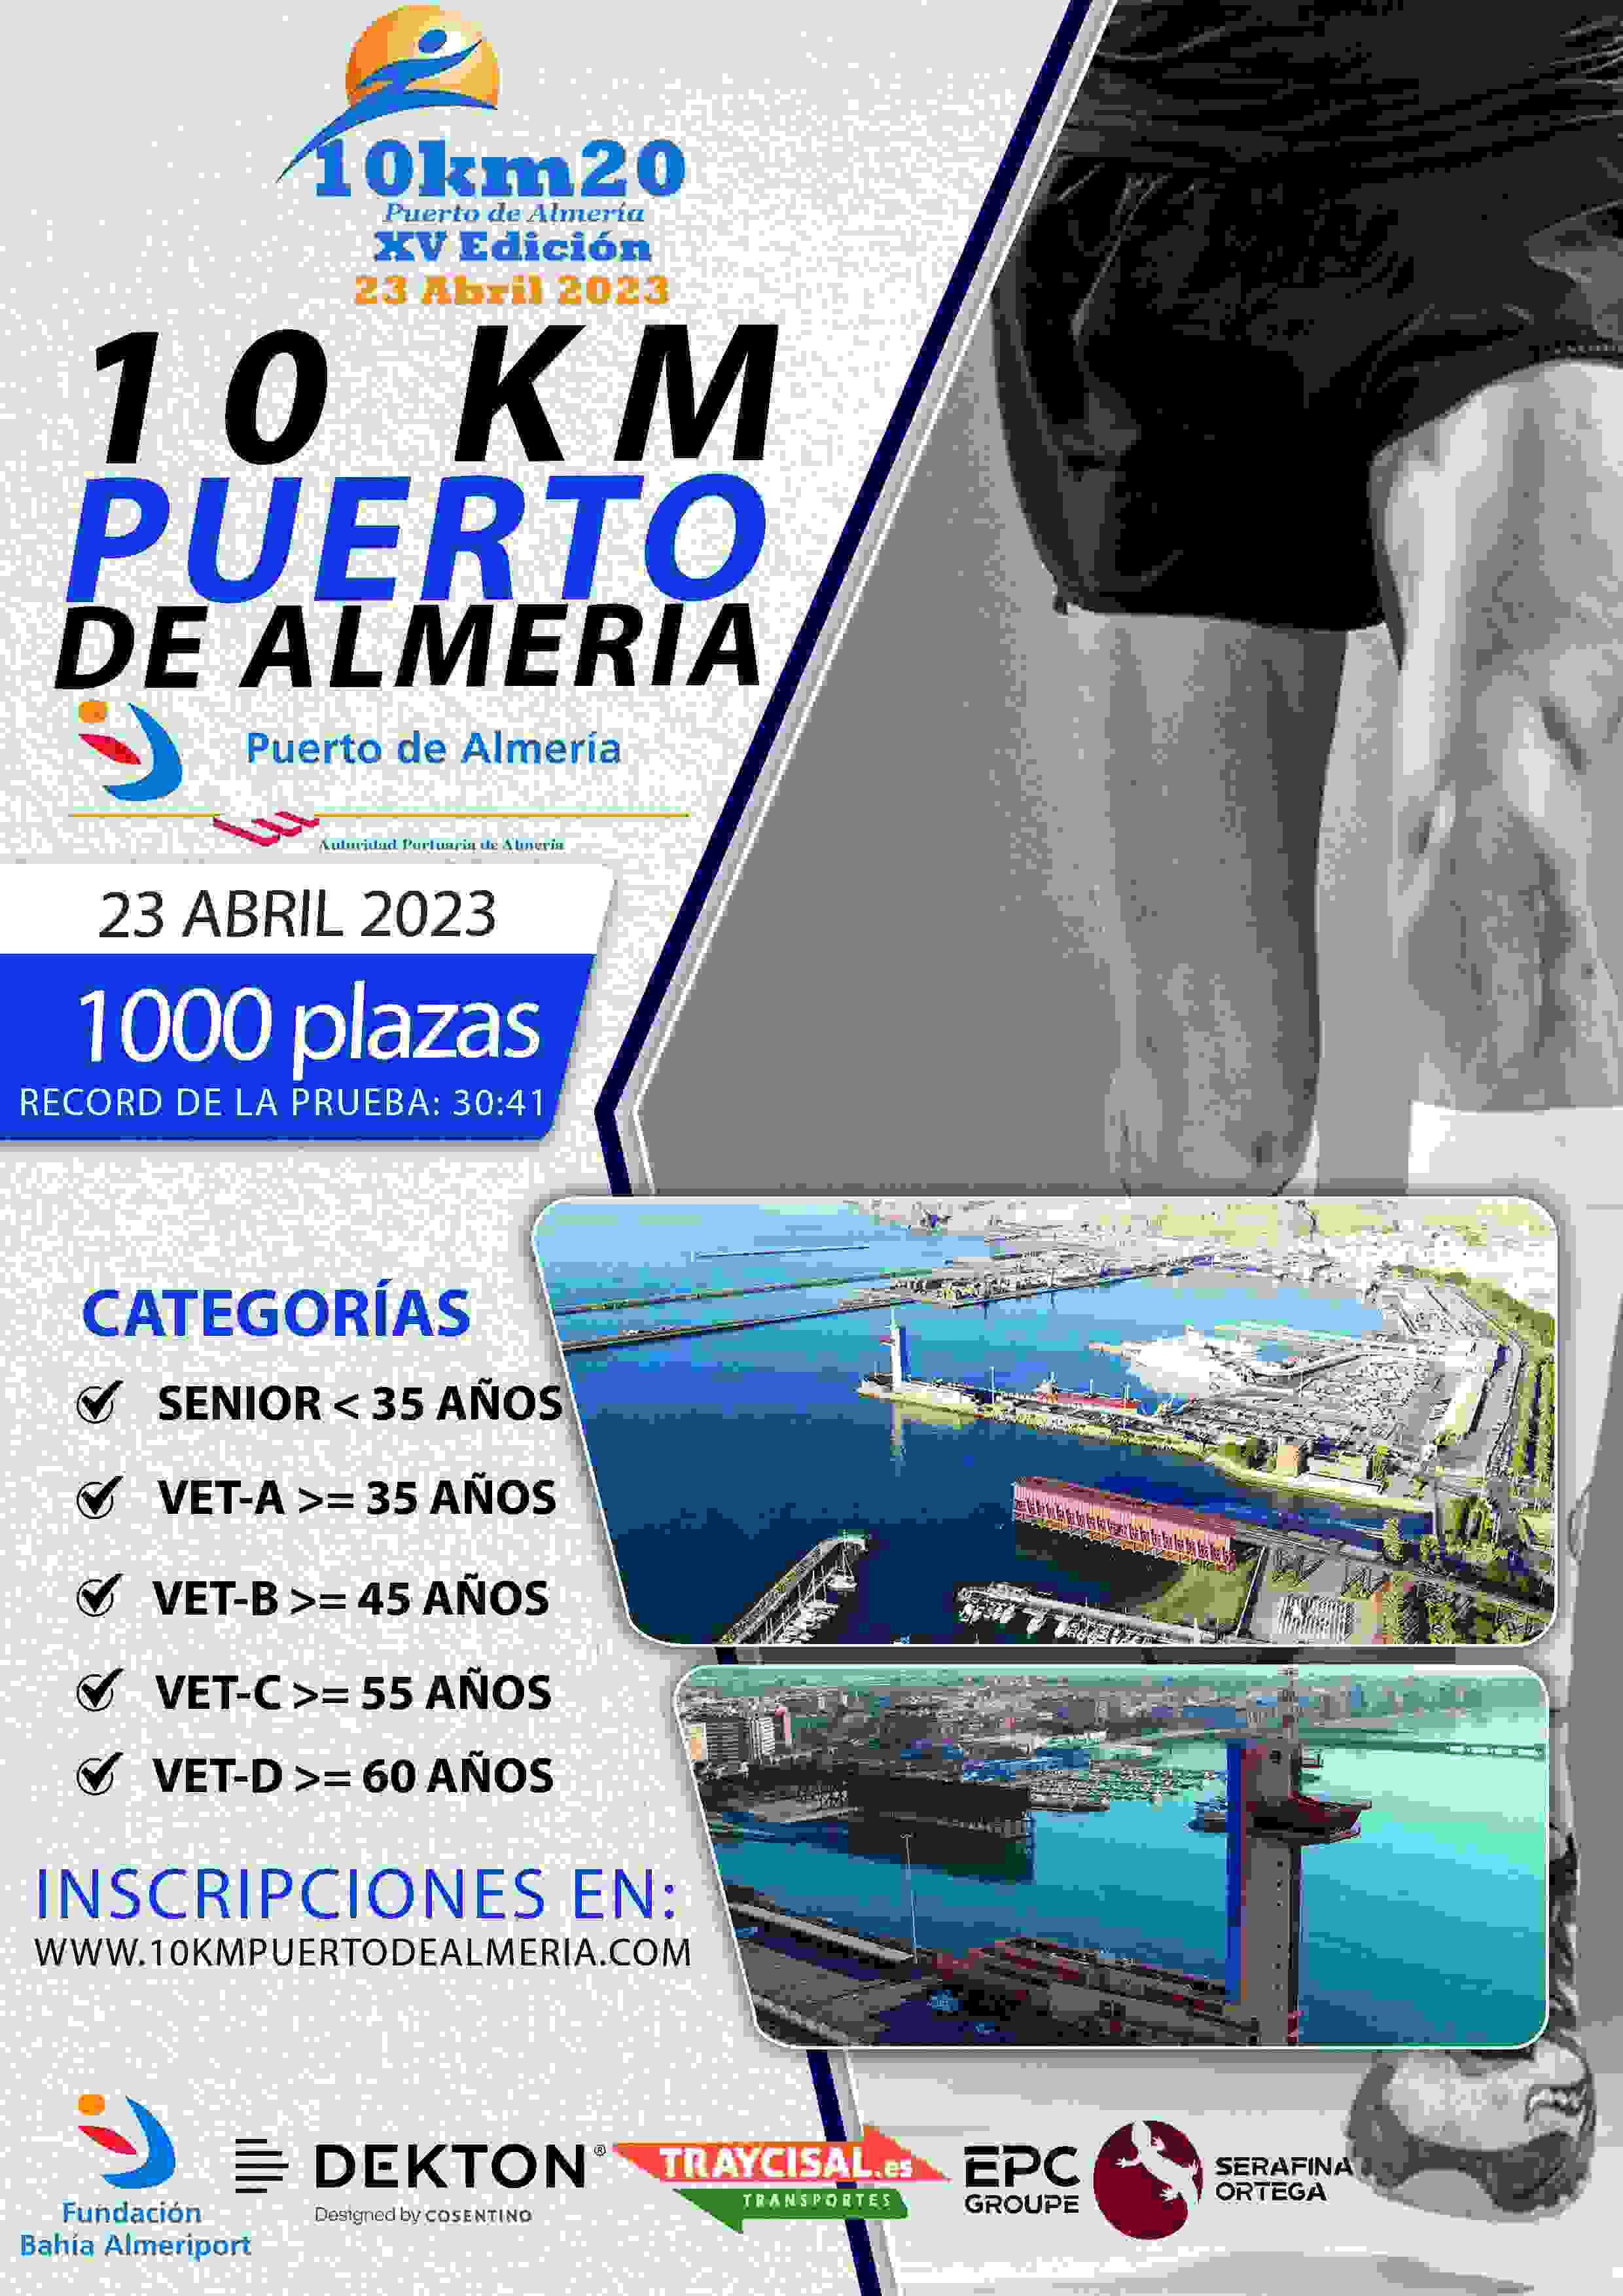 XV 10 KM PUERTO DE ALMERIA - Register